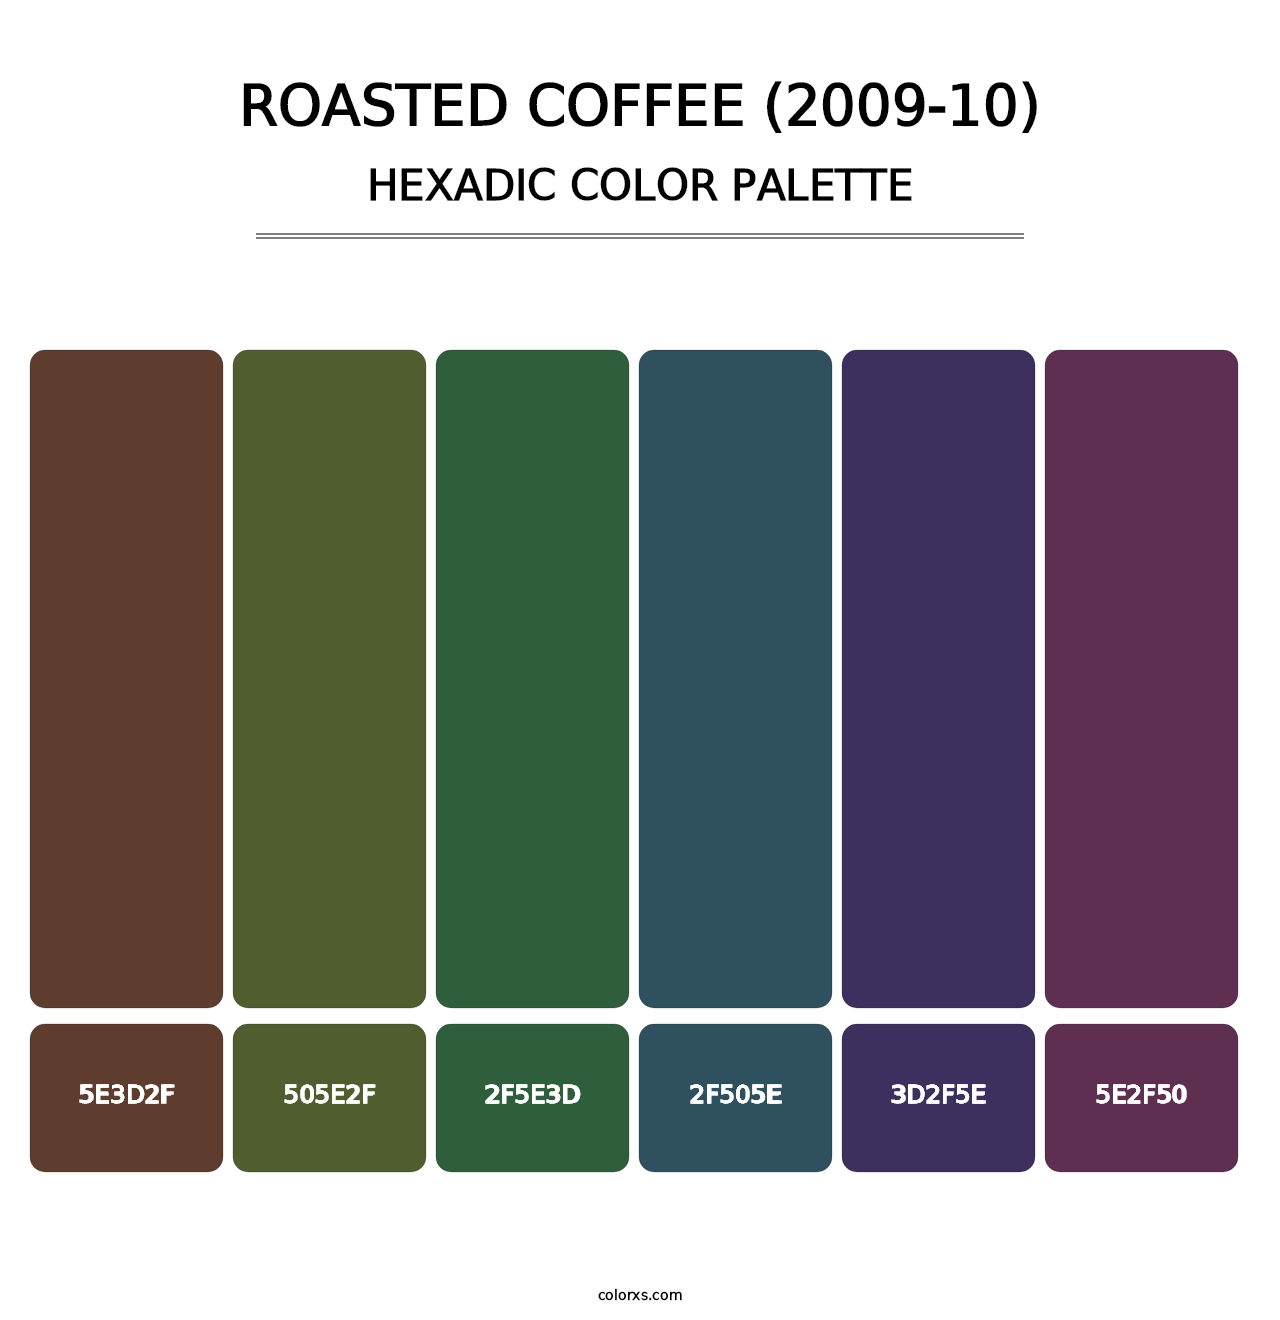 Roasted Coffee (2009-10) - Hexadic Color Palette